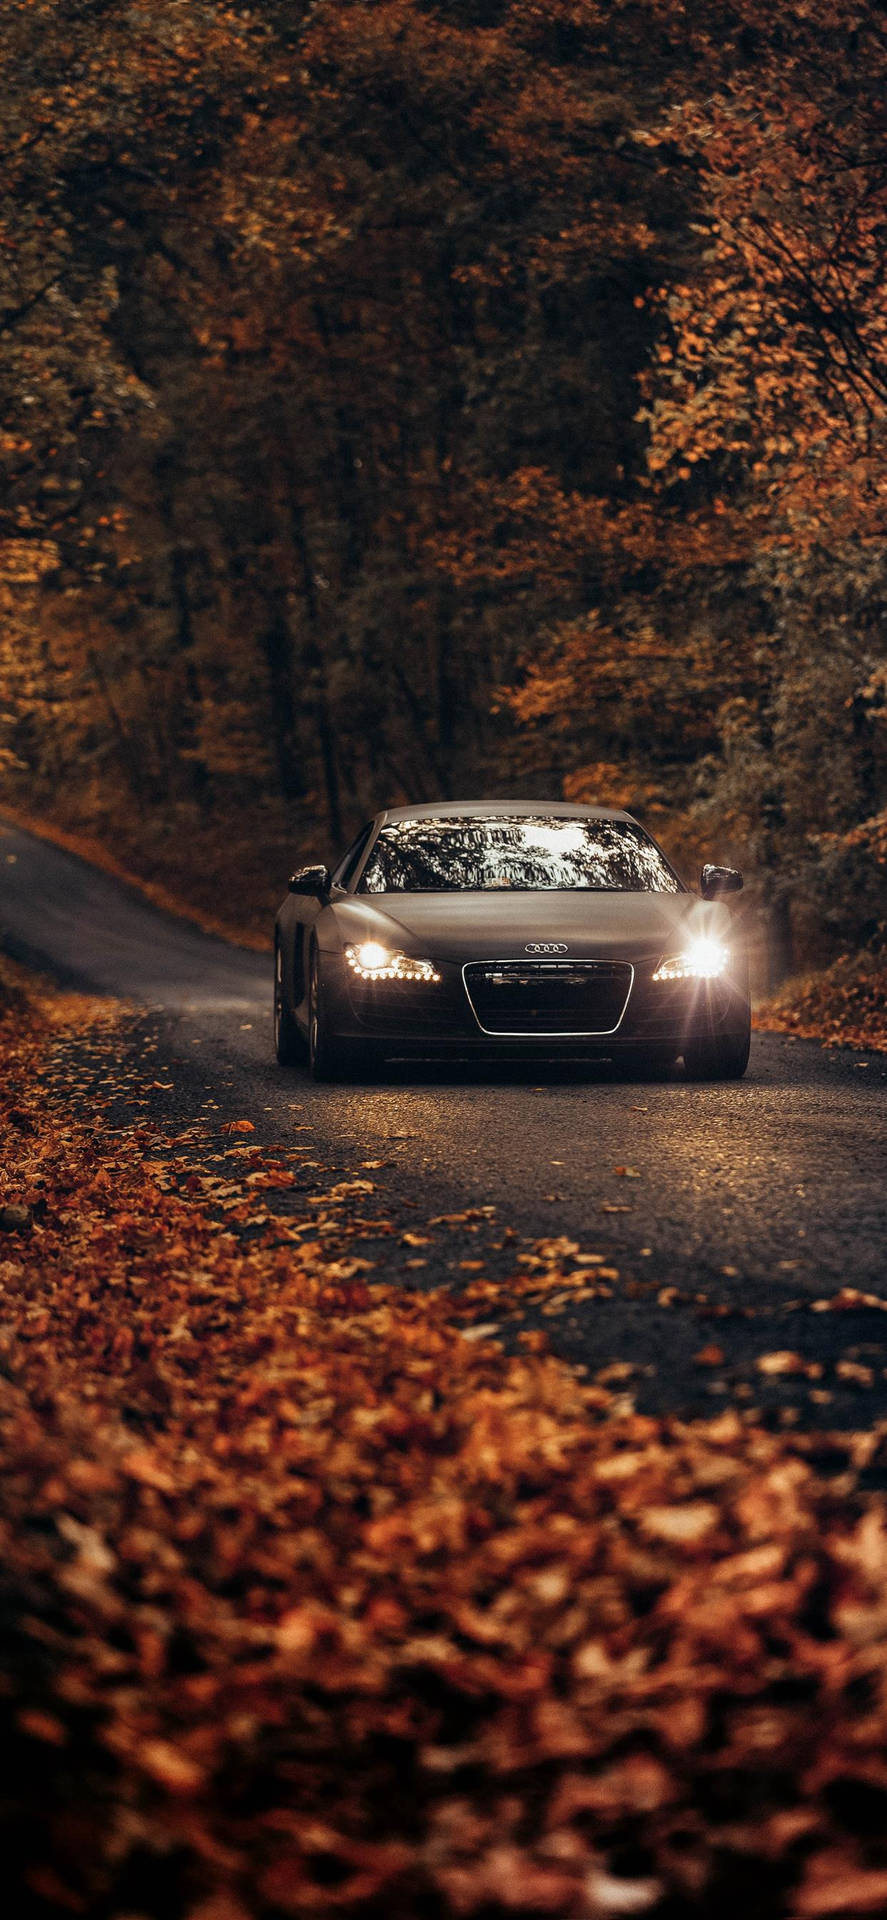 Iphone X Car Audi R8 Autumn Background